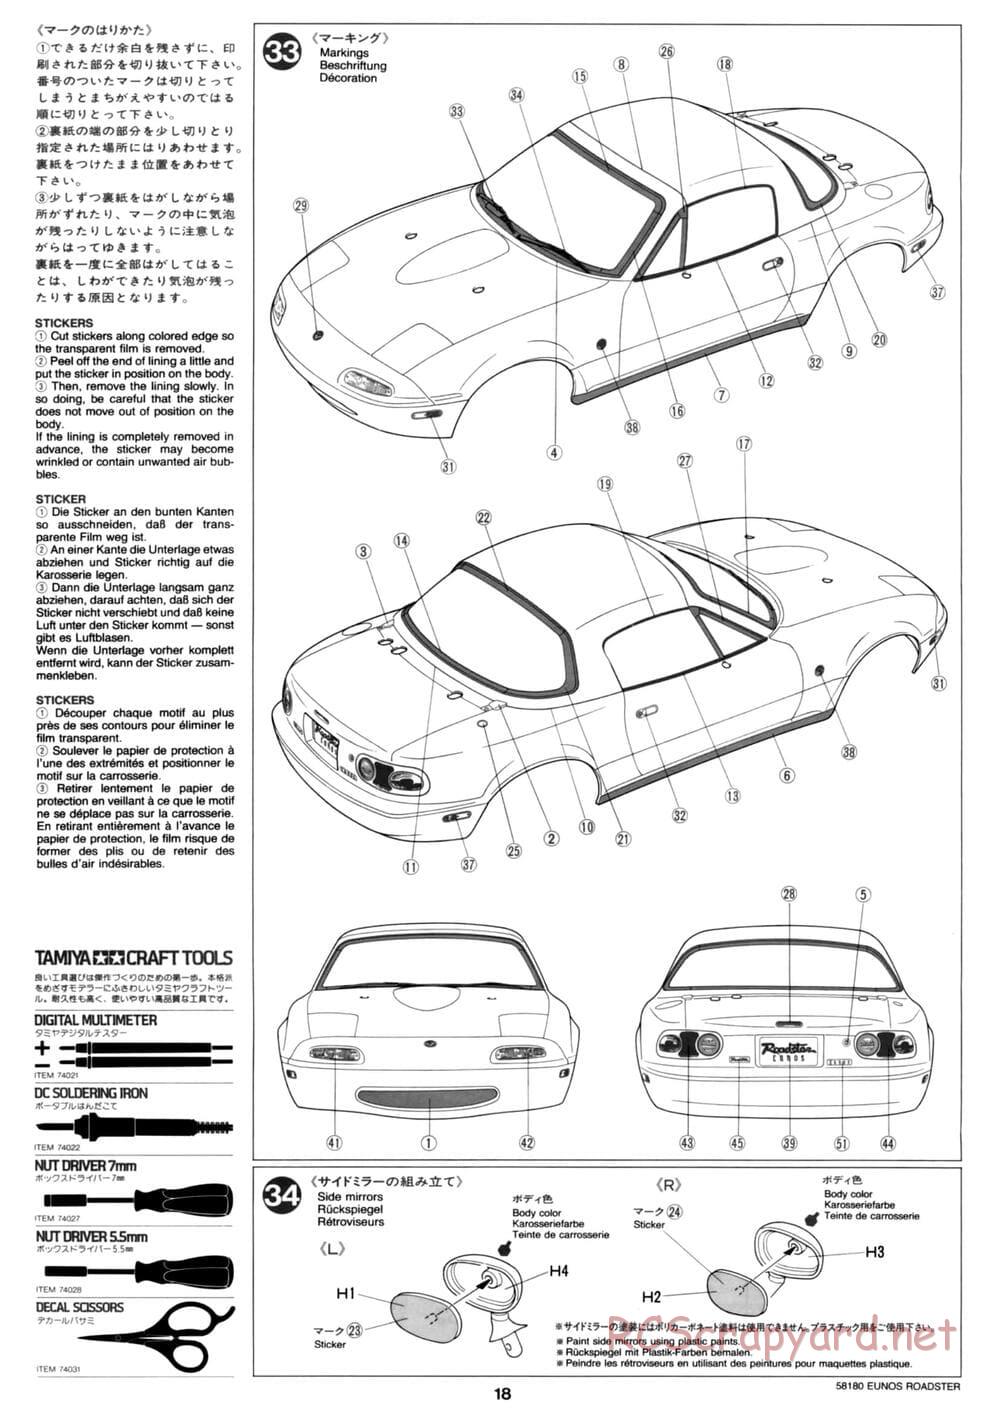 Tamiya - Eunos Roadster - M02M Chassis - Manual - Page 18